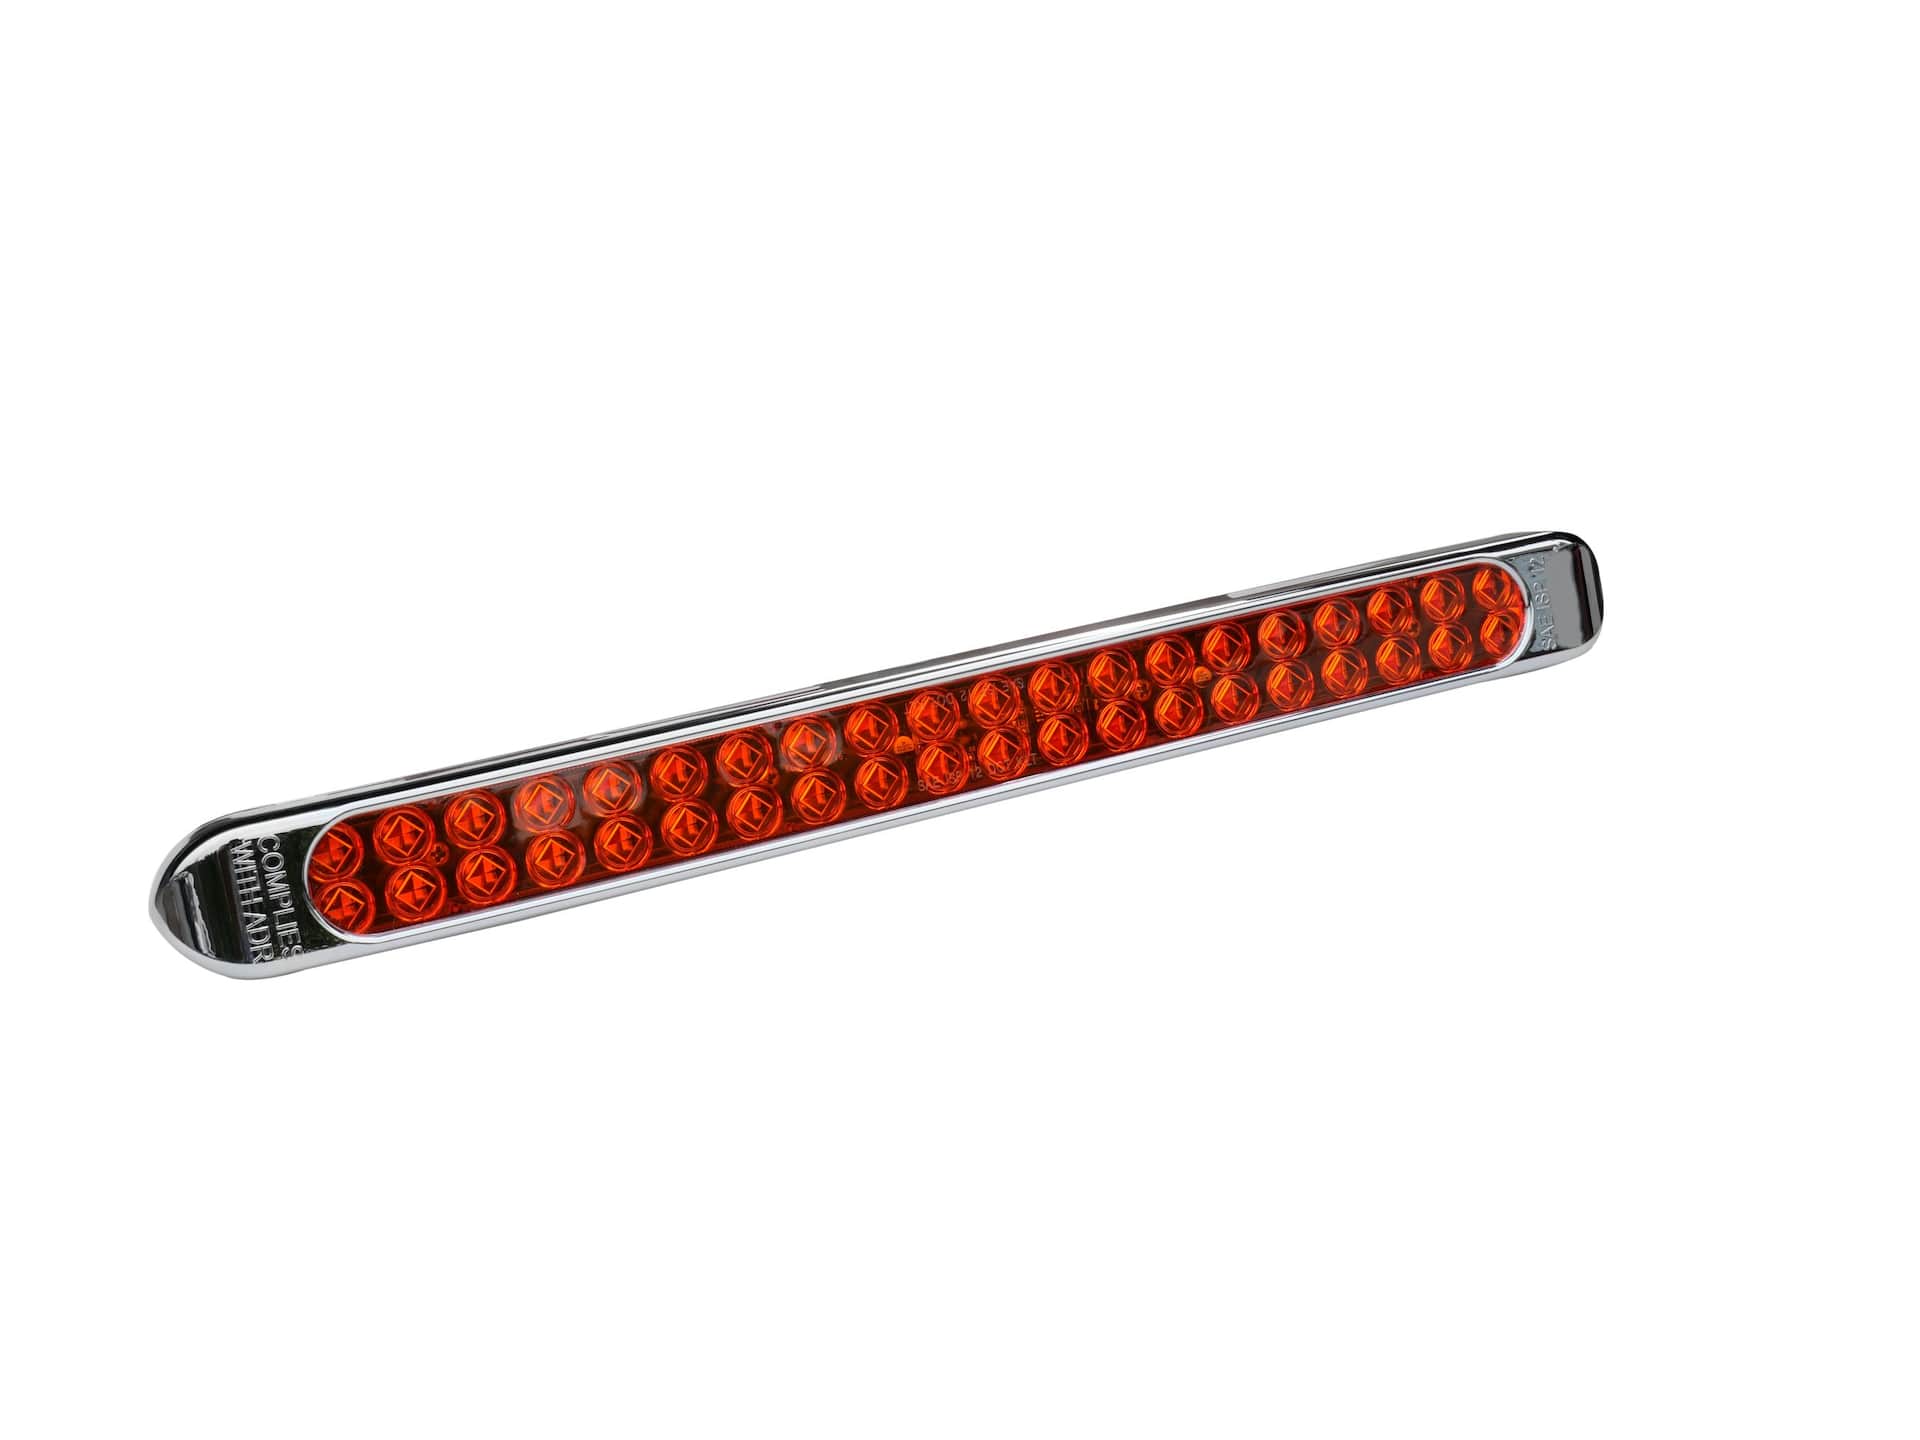 Hendo LED Trailer Turn Indicator Light Bar | Canadian Tire